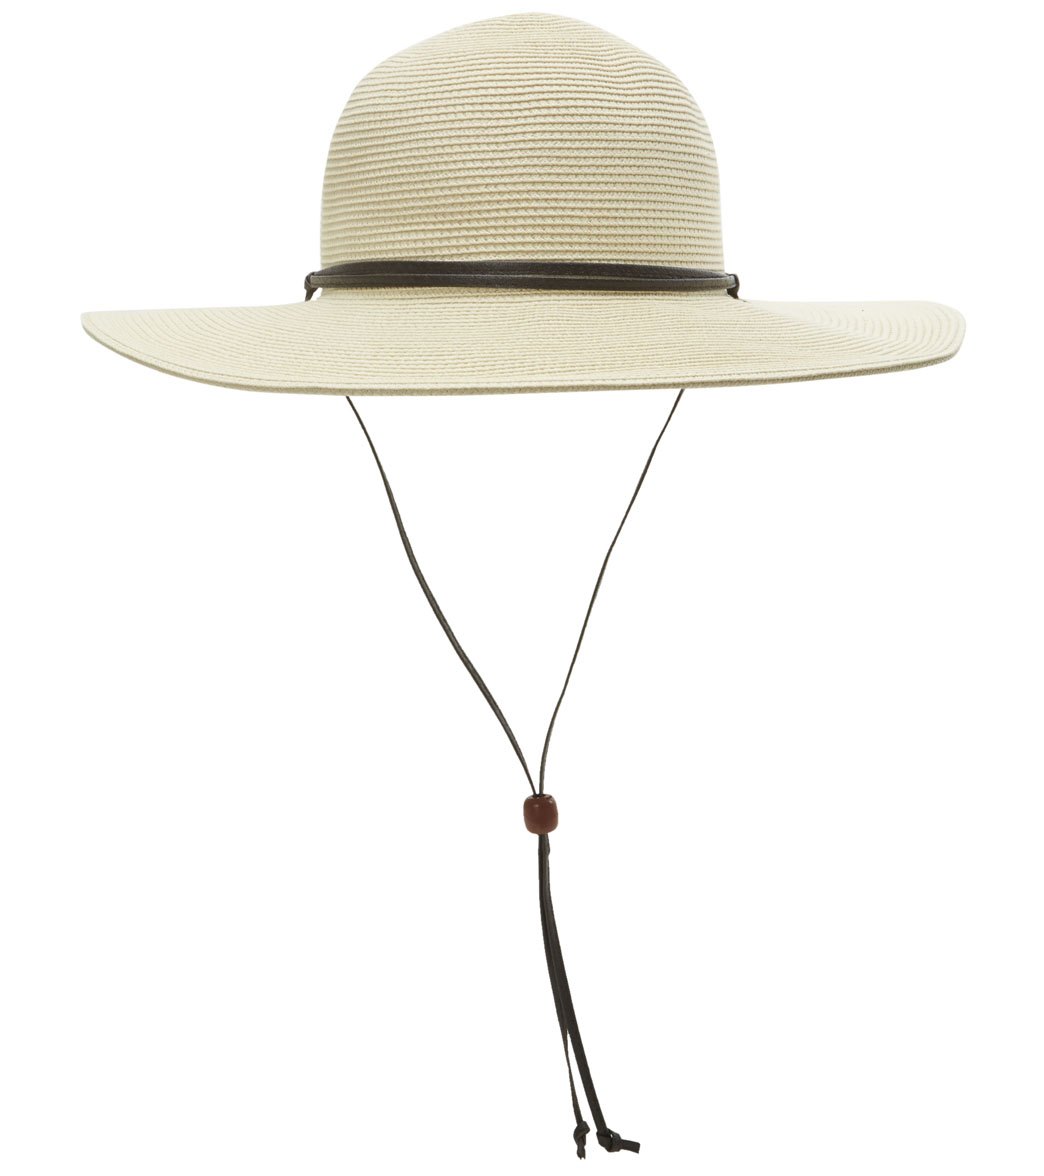 Peter Grimm Coralia Packable Sun Hat